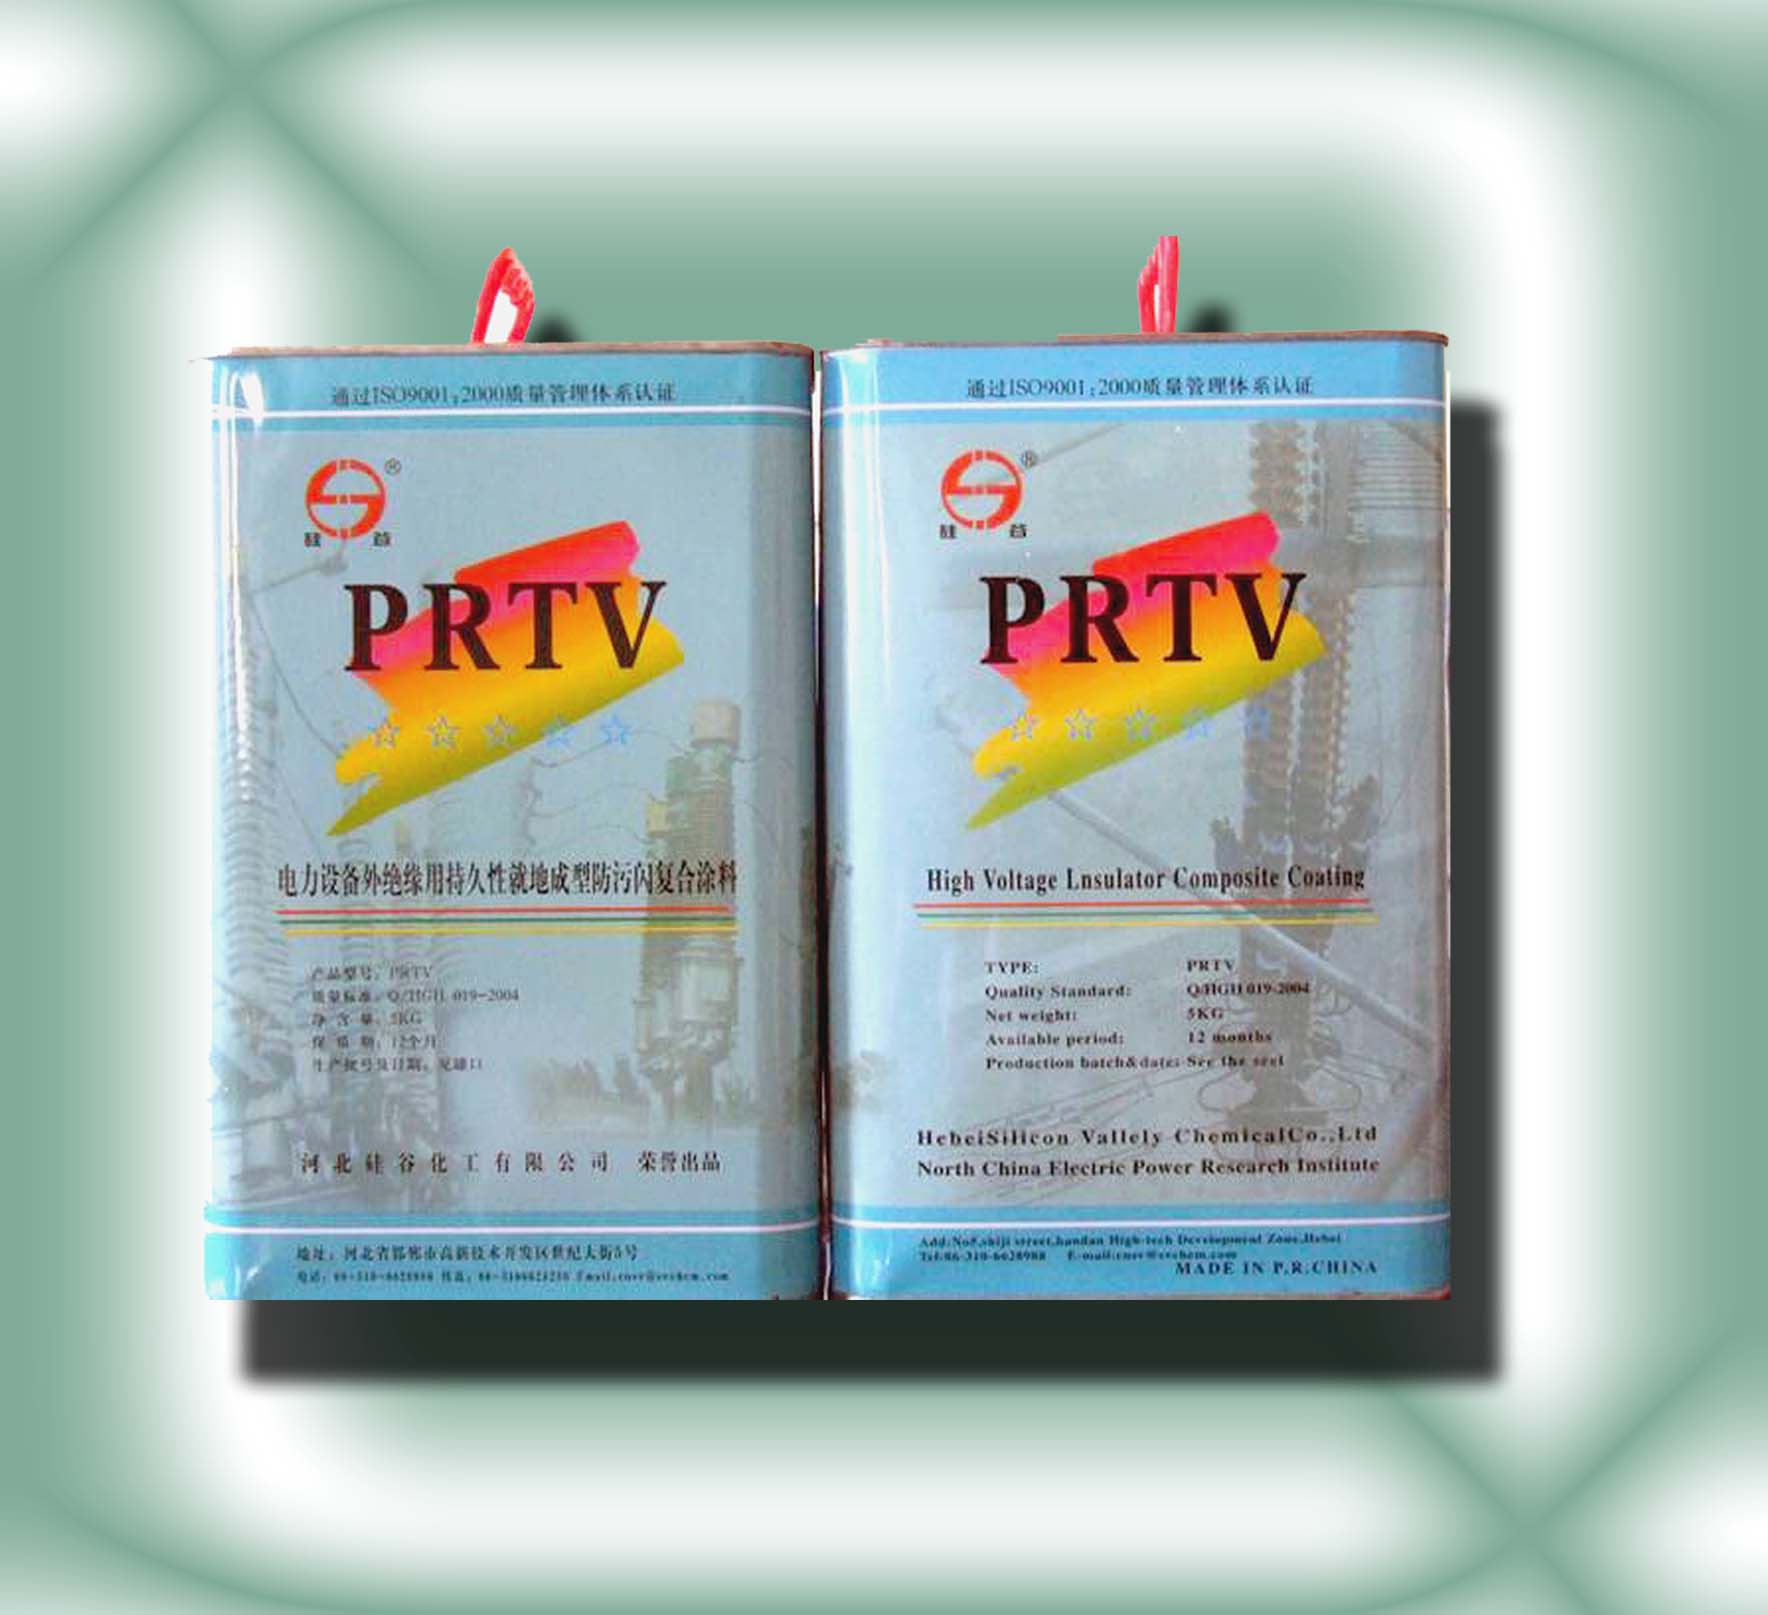 PRTV anti-flashover coating for insulator